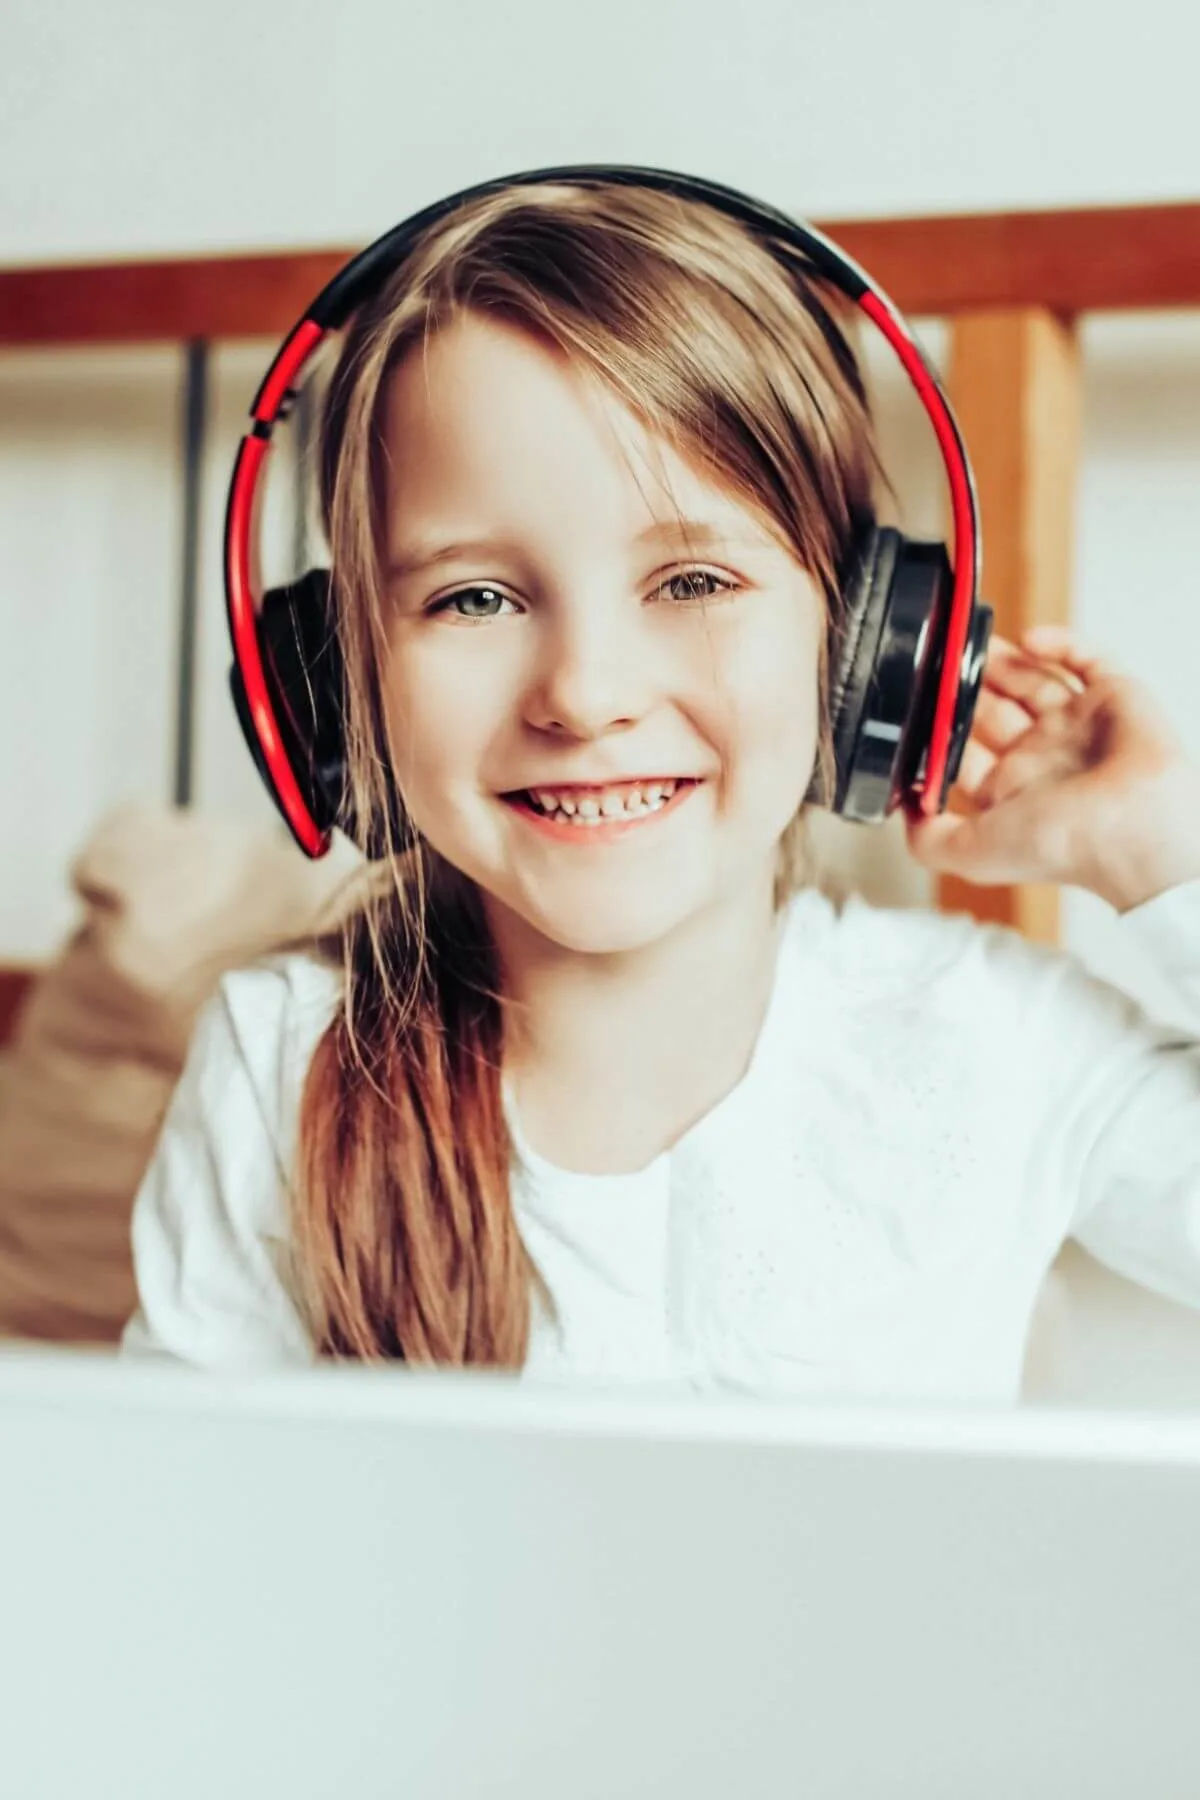 Child listening to audiobook